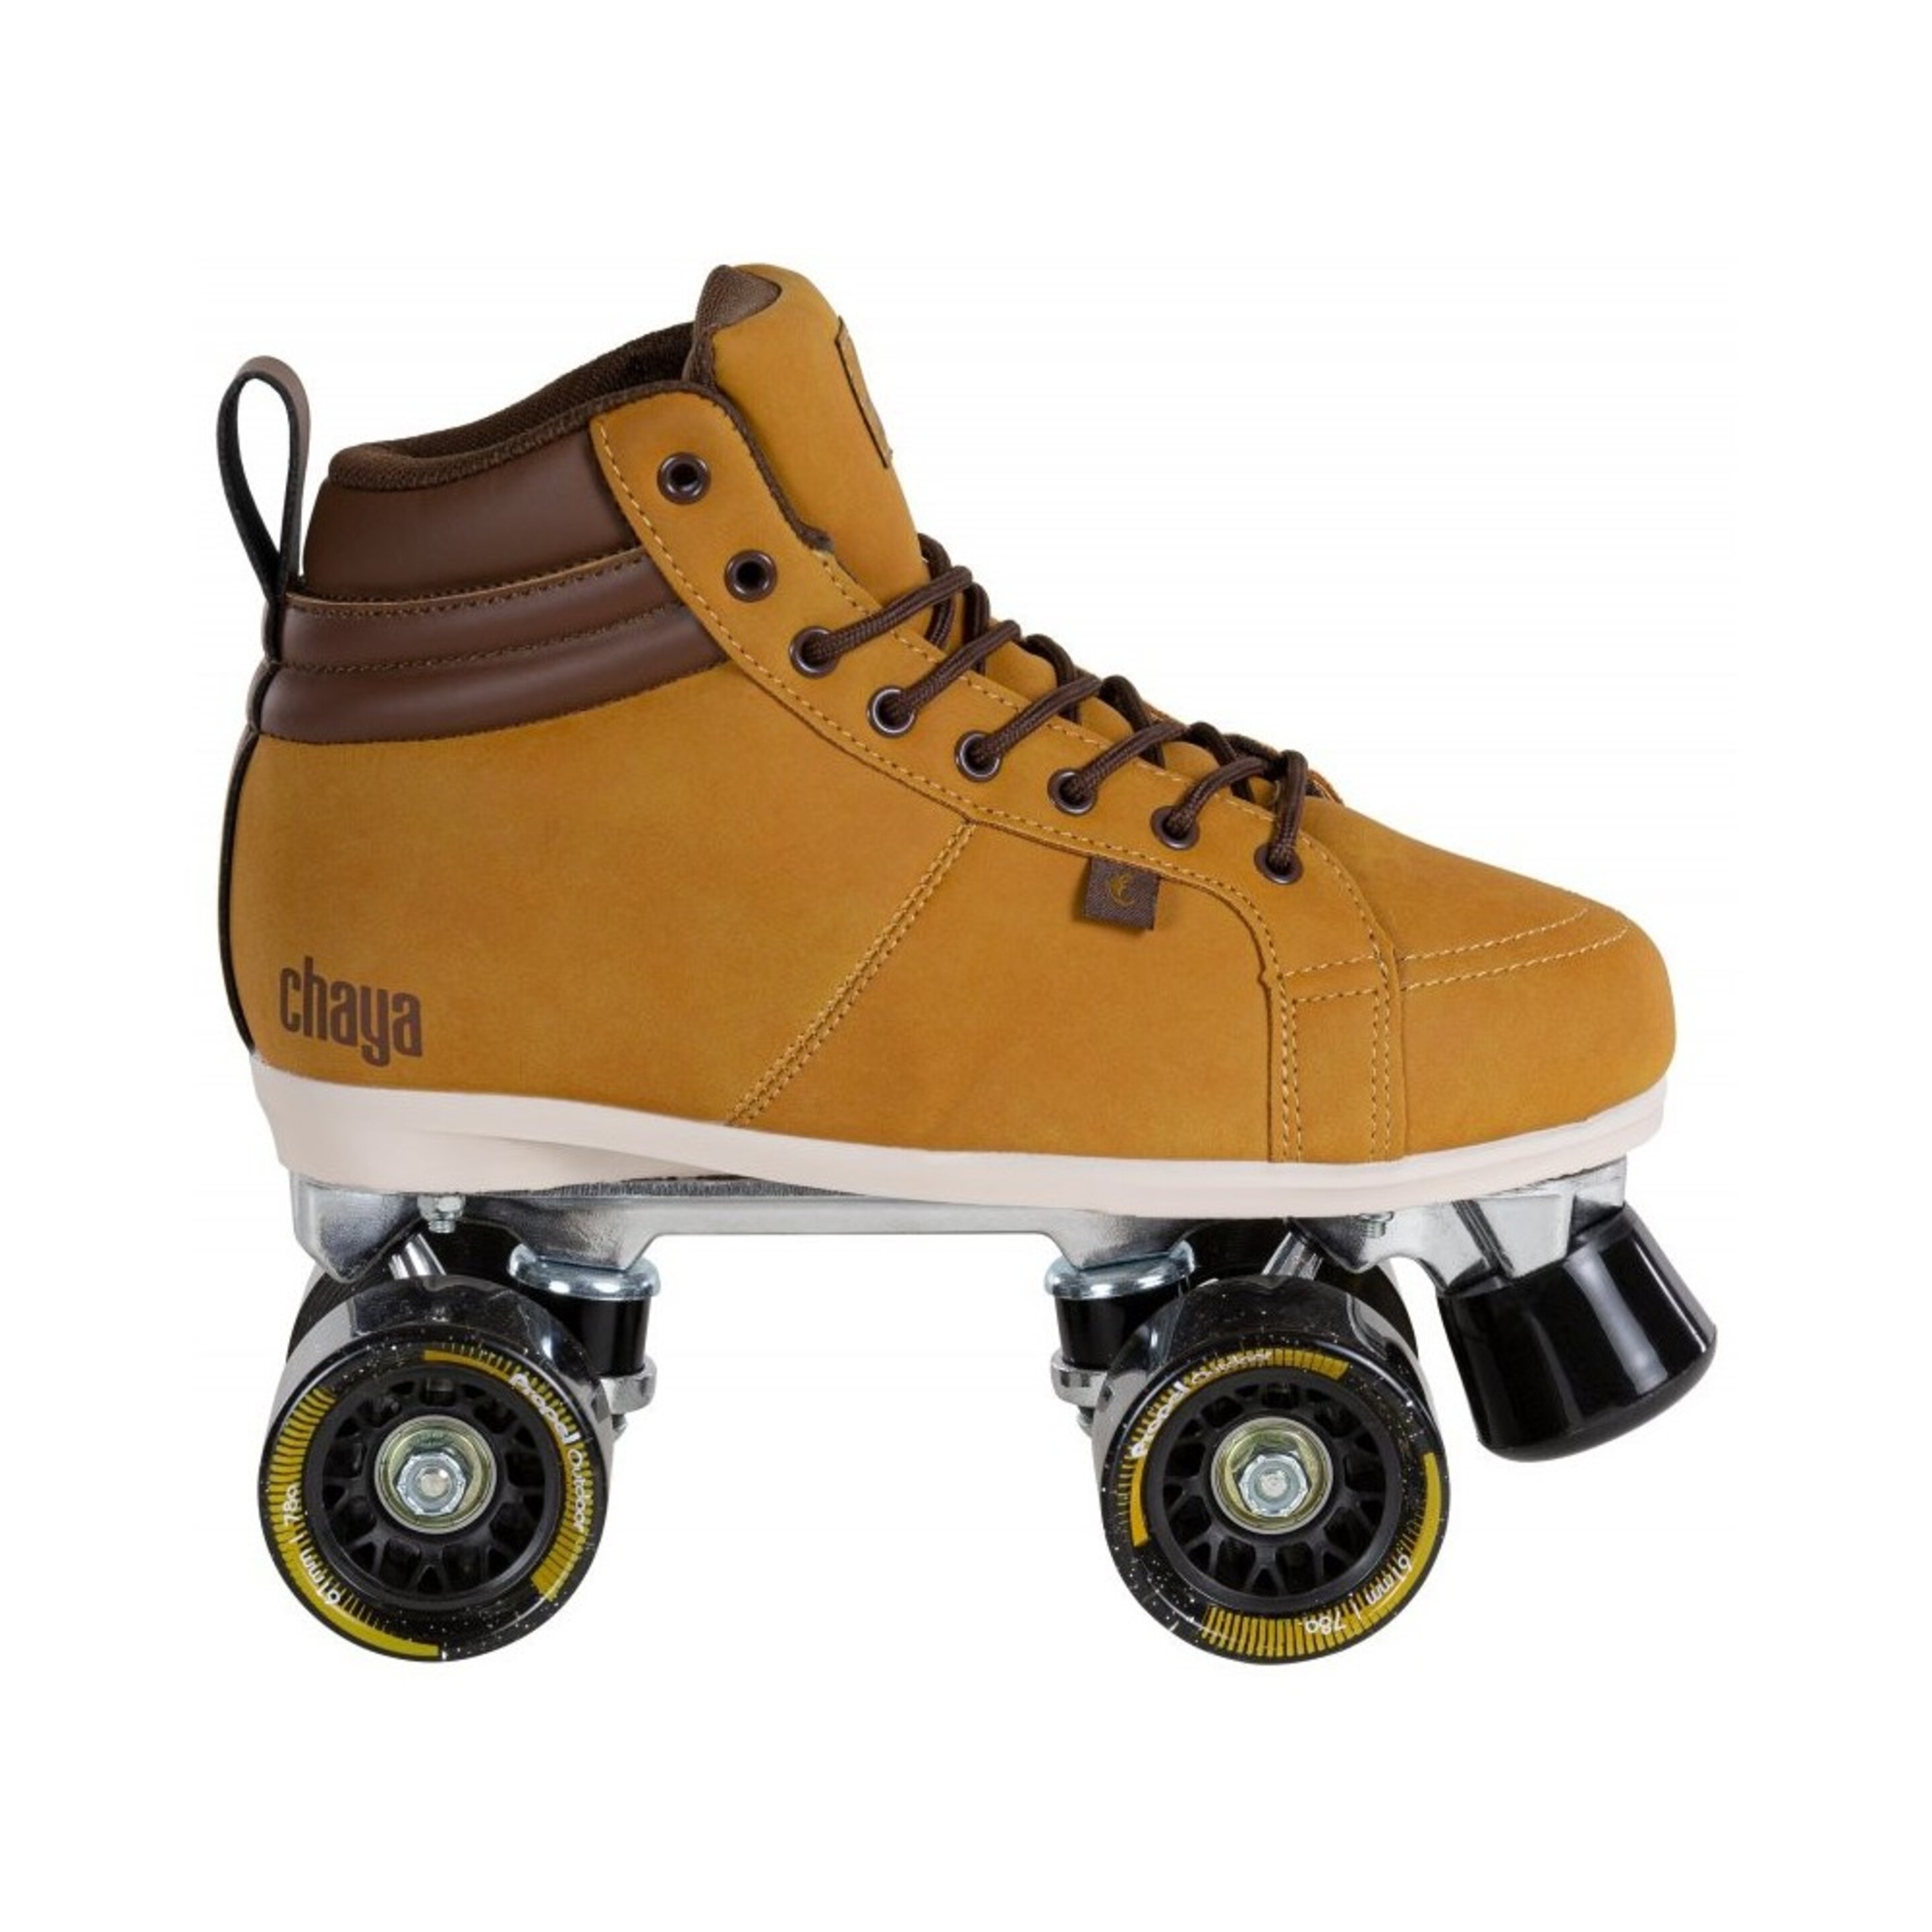 Chaya Vintage Roller Skates Voyager